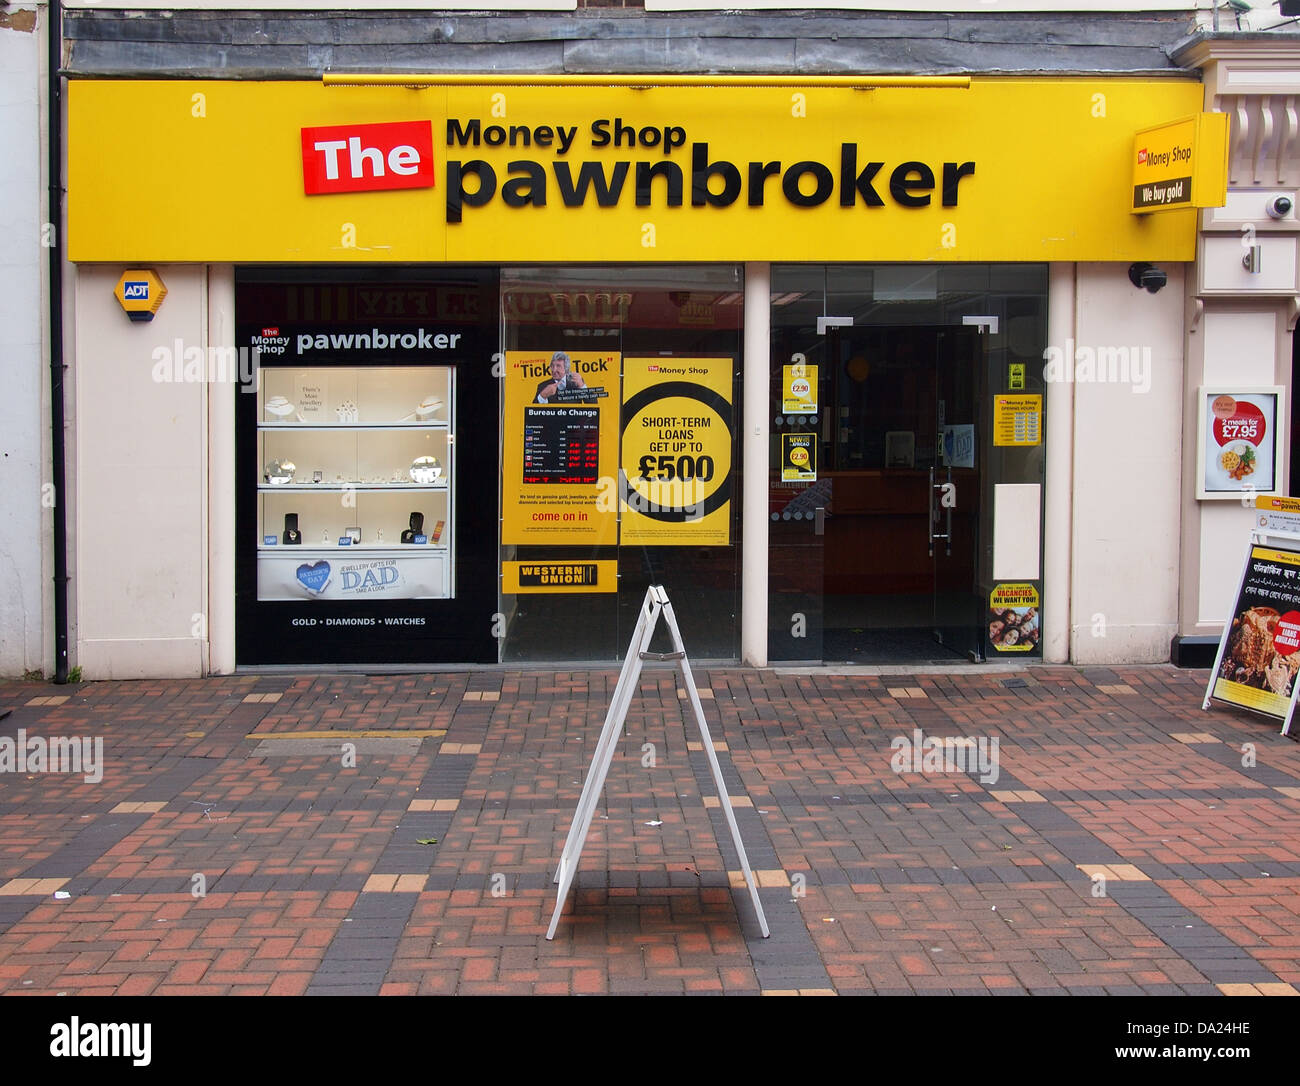 El dinero Shop Pawnbroker, Swindon, Inglaterra Foto de stock